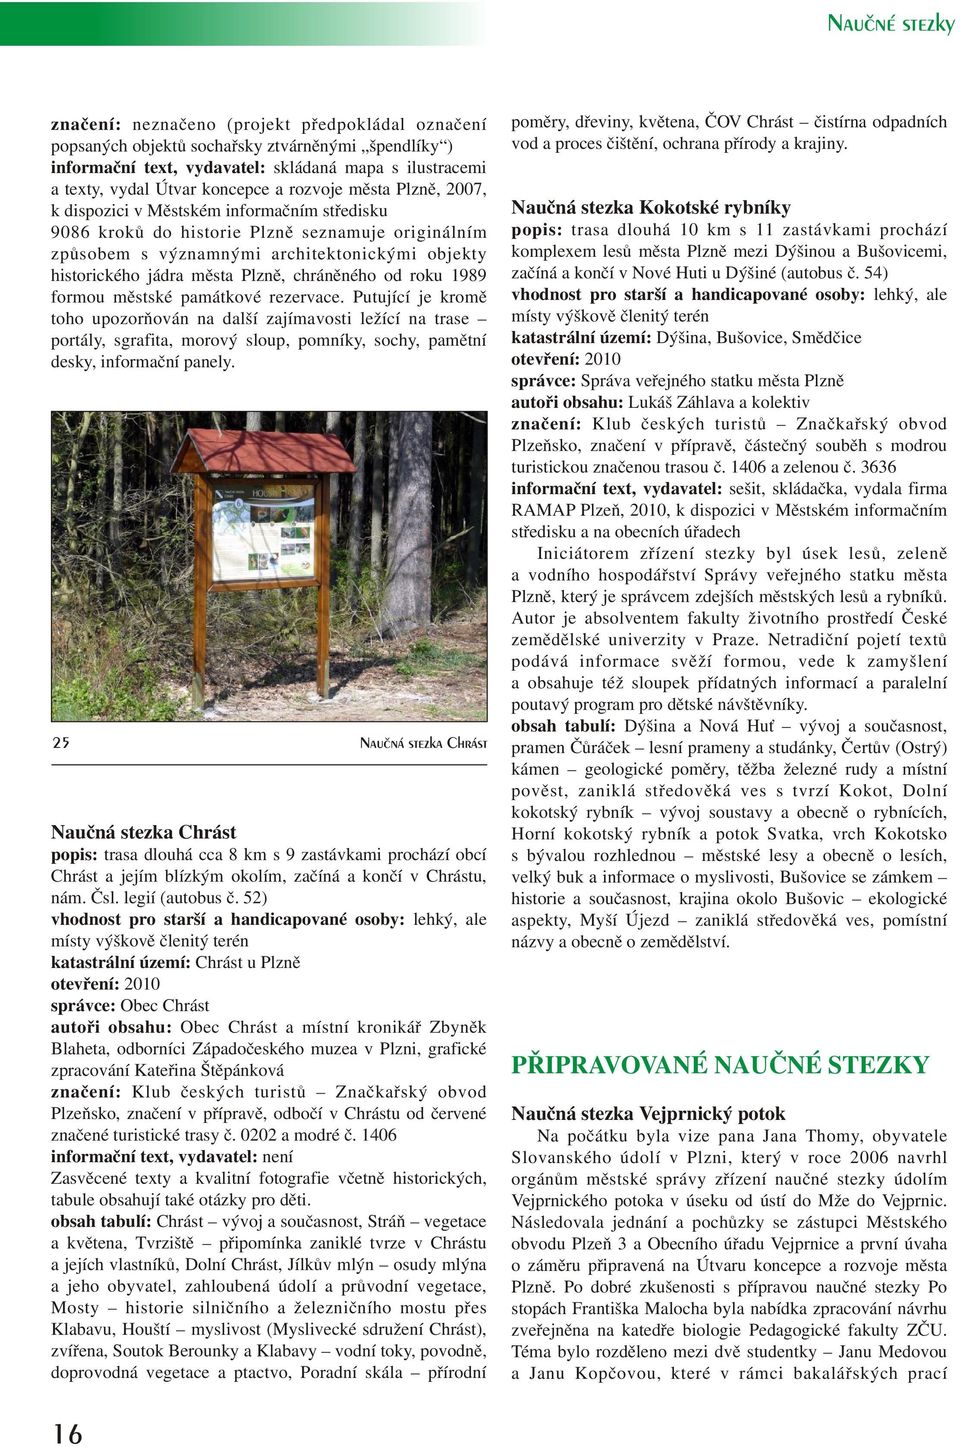 jádra mìsta Plznì, chránìného od roku 1989 formou mìstské památkové rezervace.